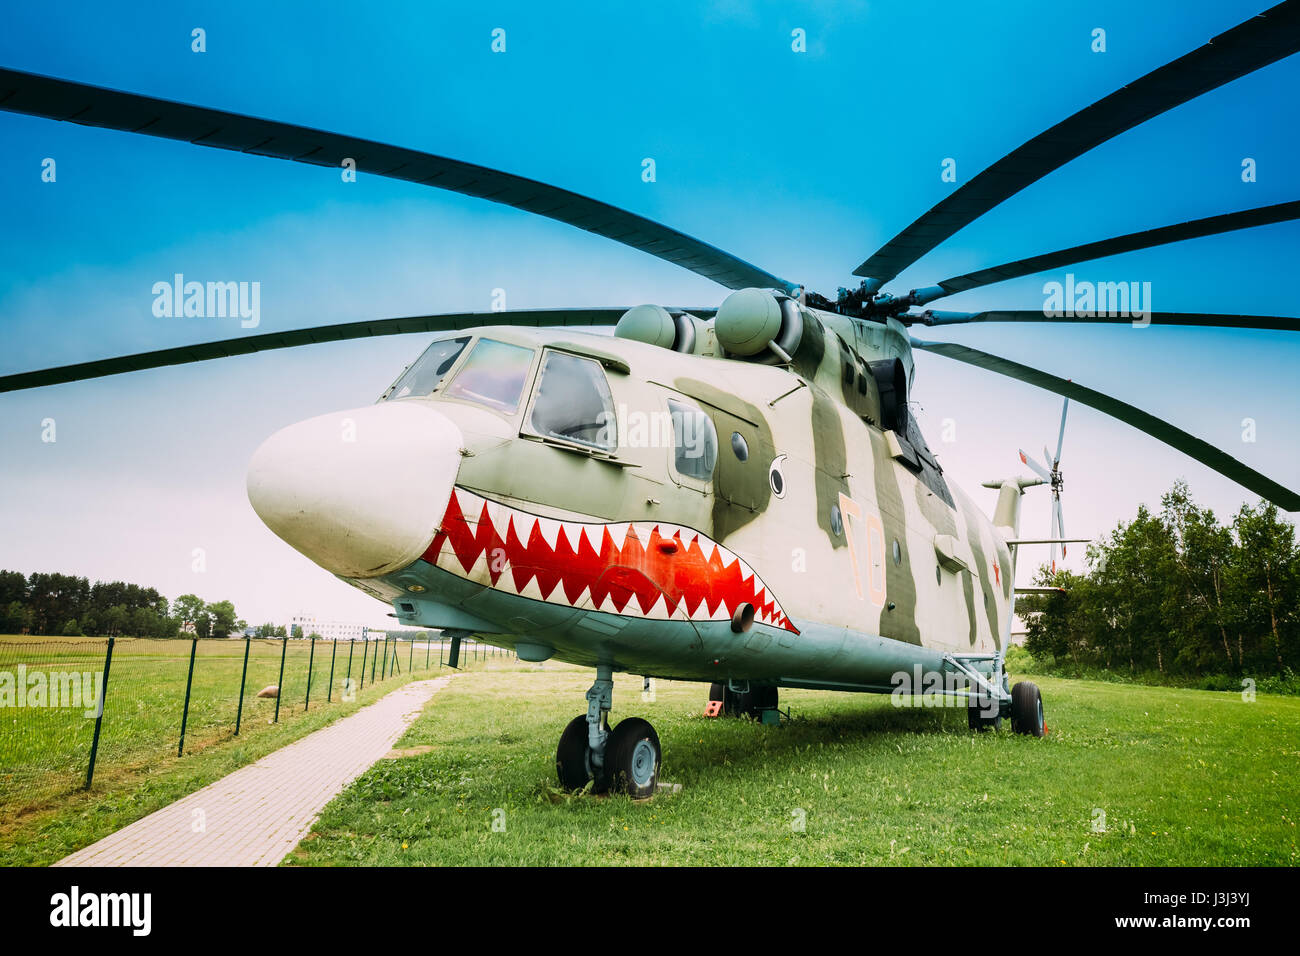 Russian Soviet multi-purpose transport helicopter. Stock Photo